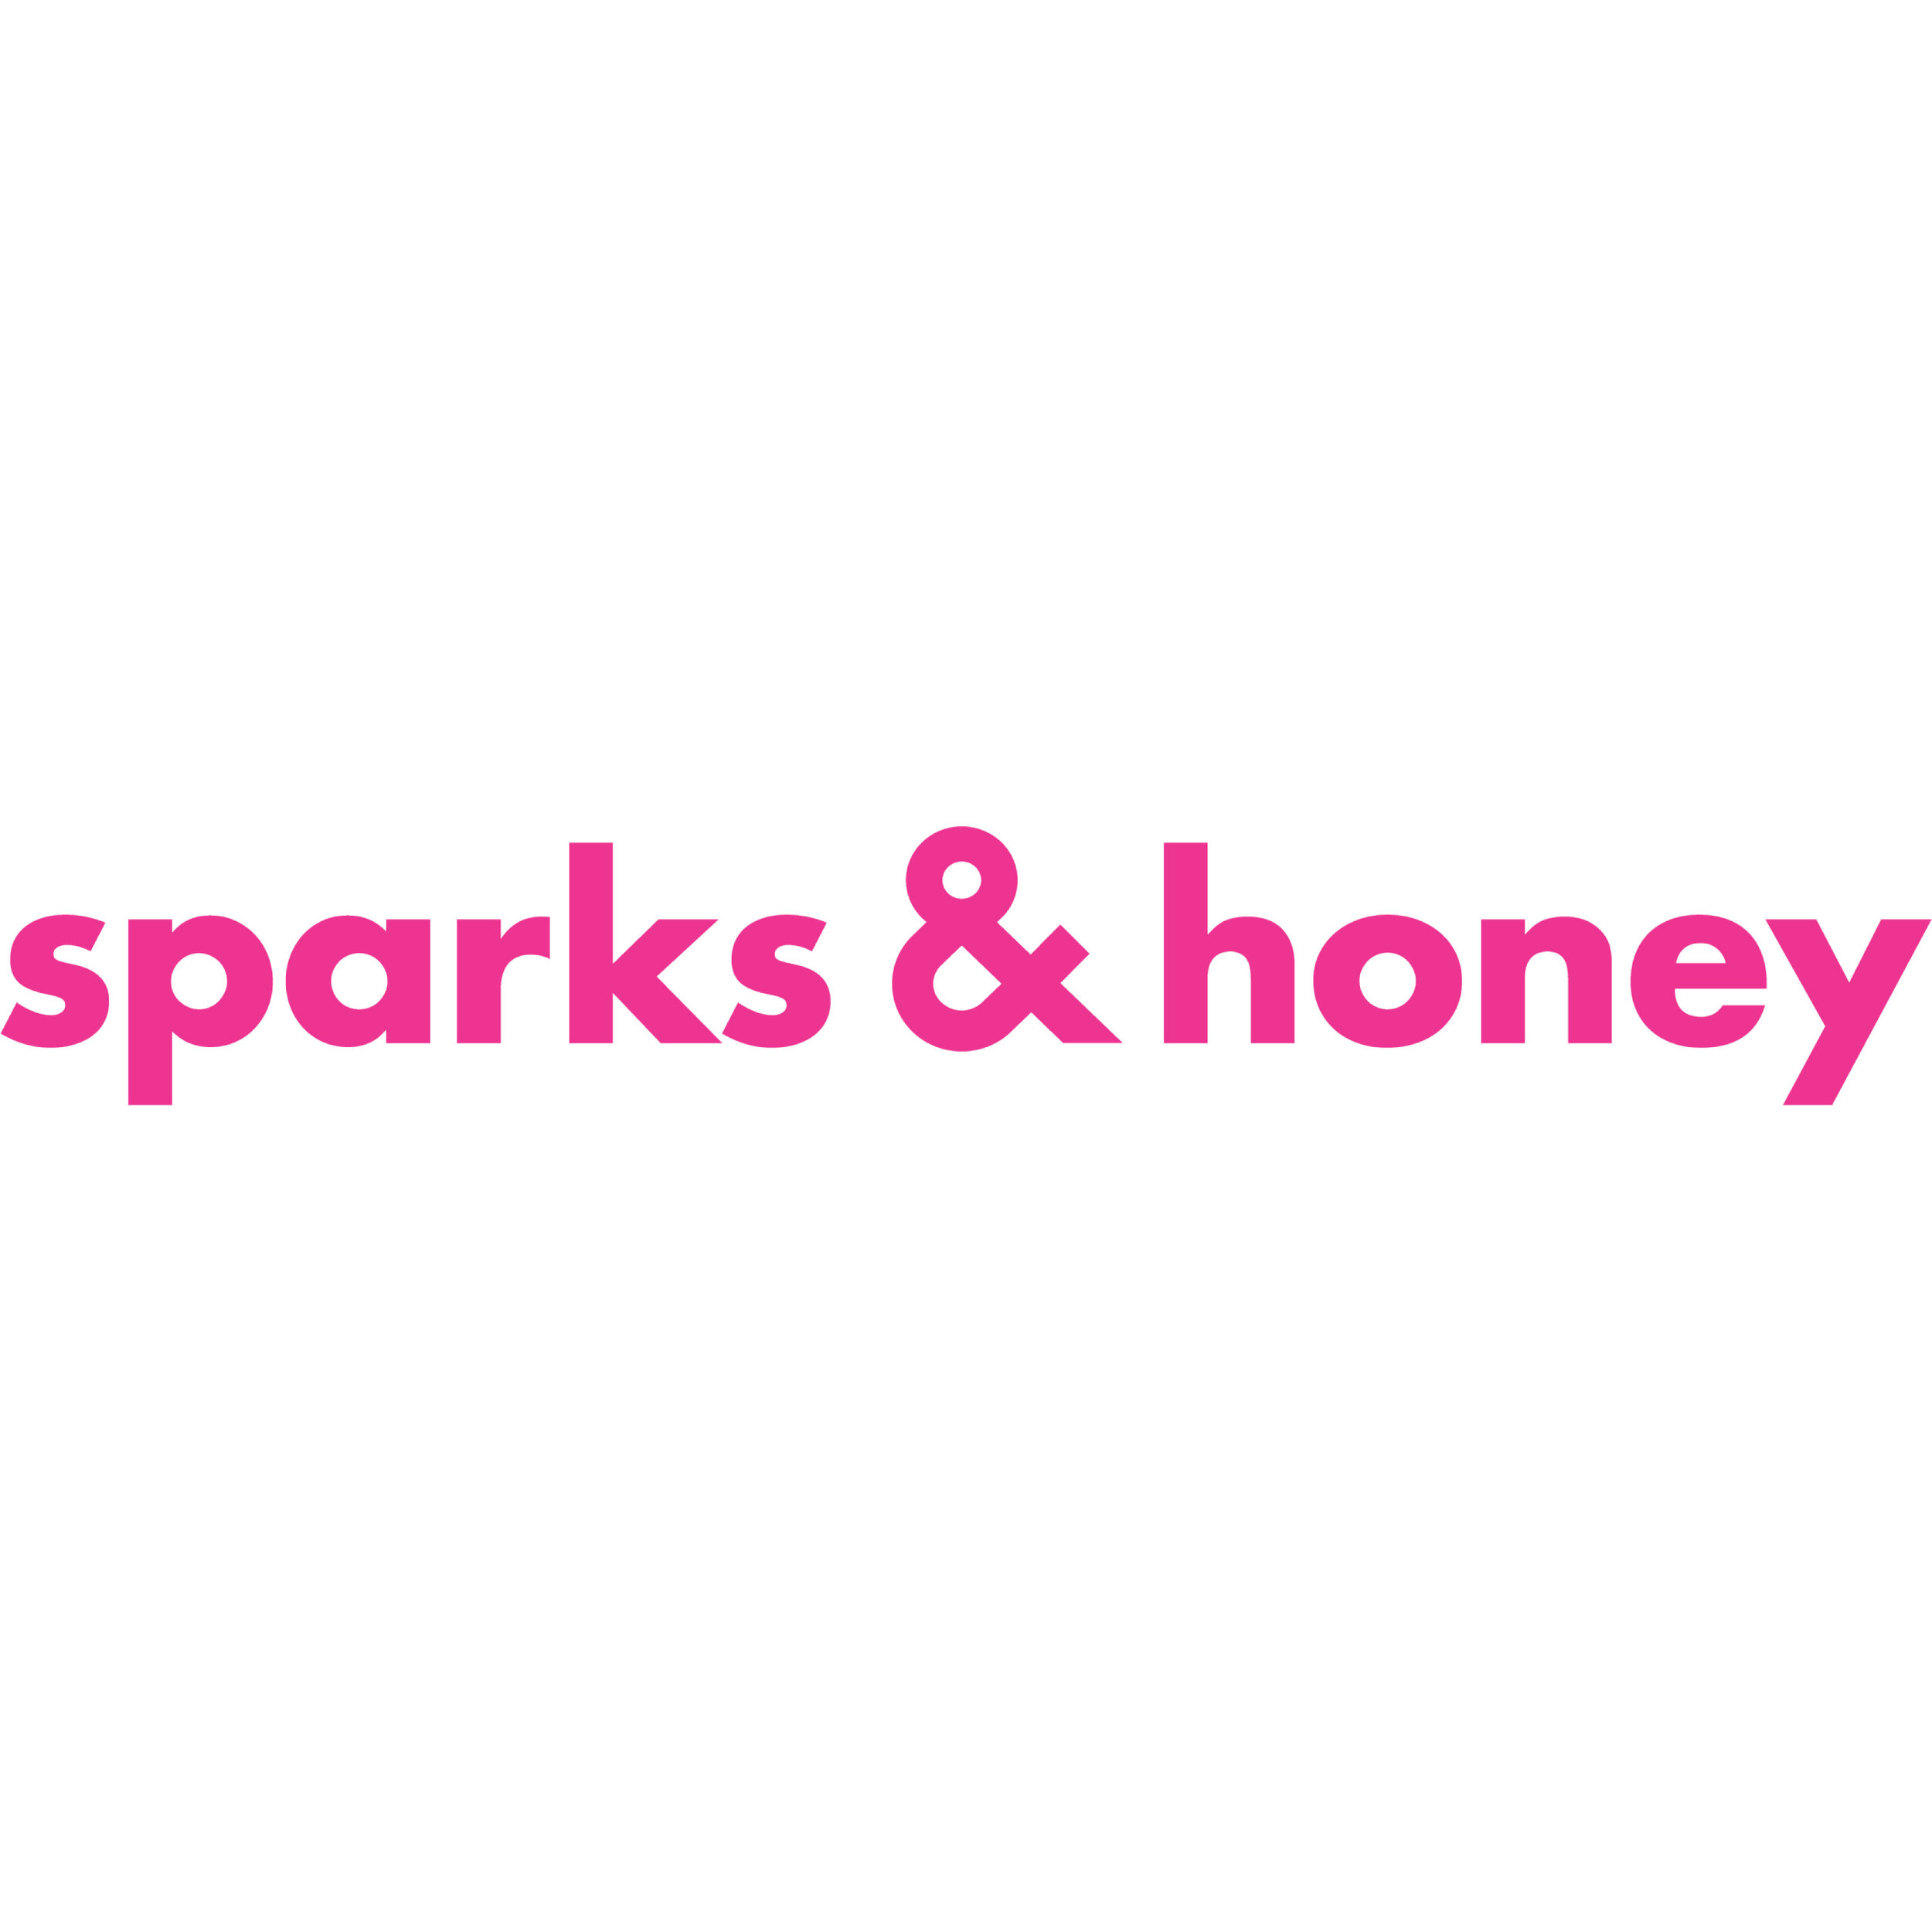 Sparks-Honey-web.jpg